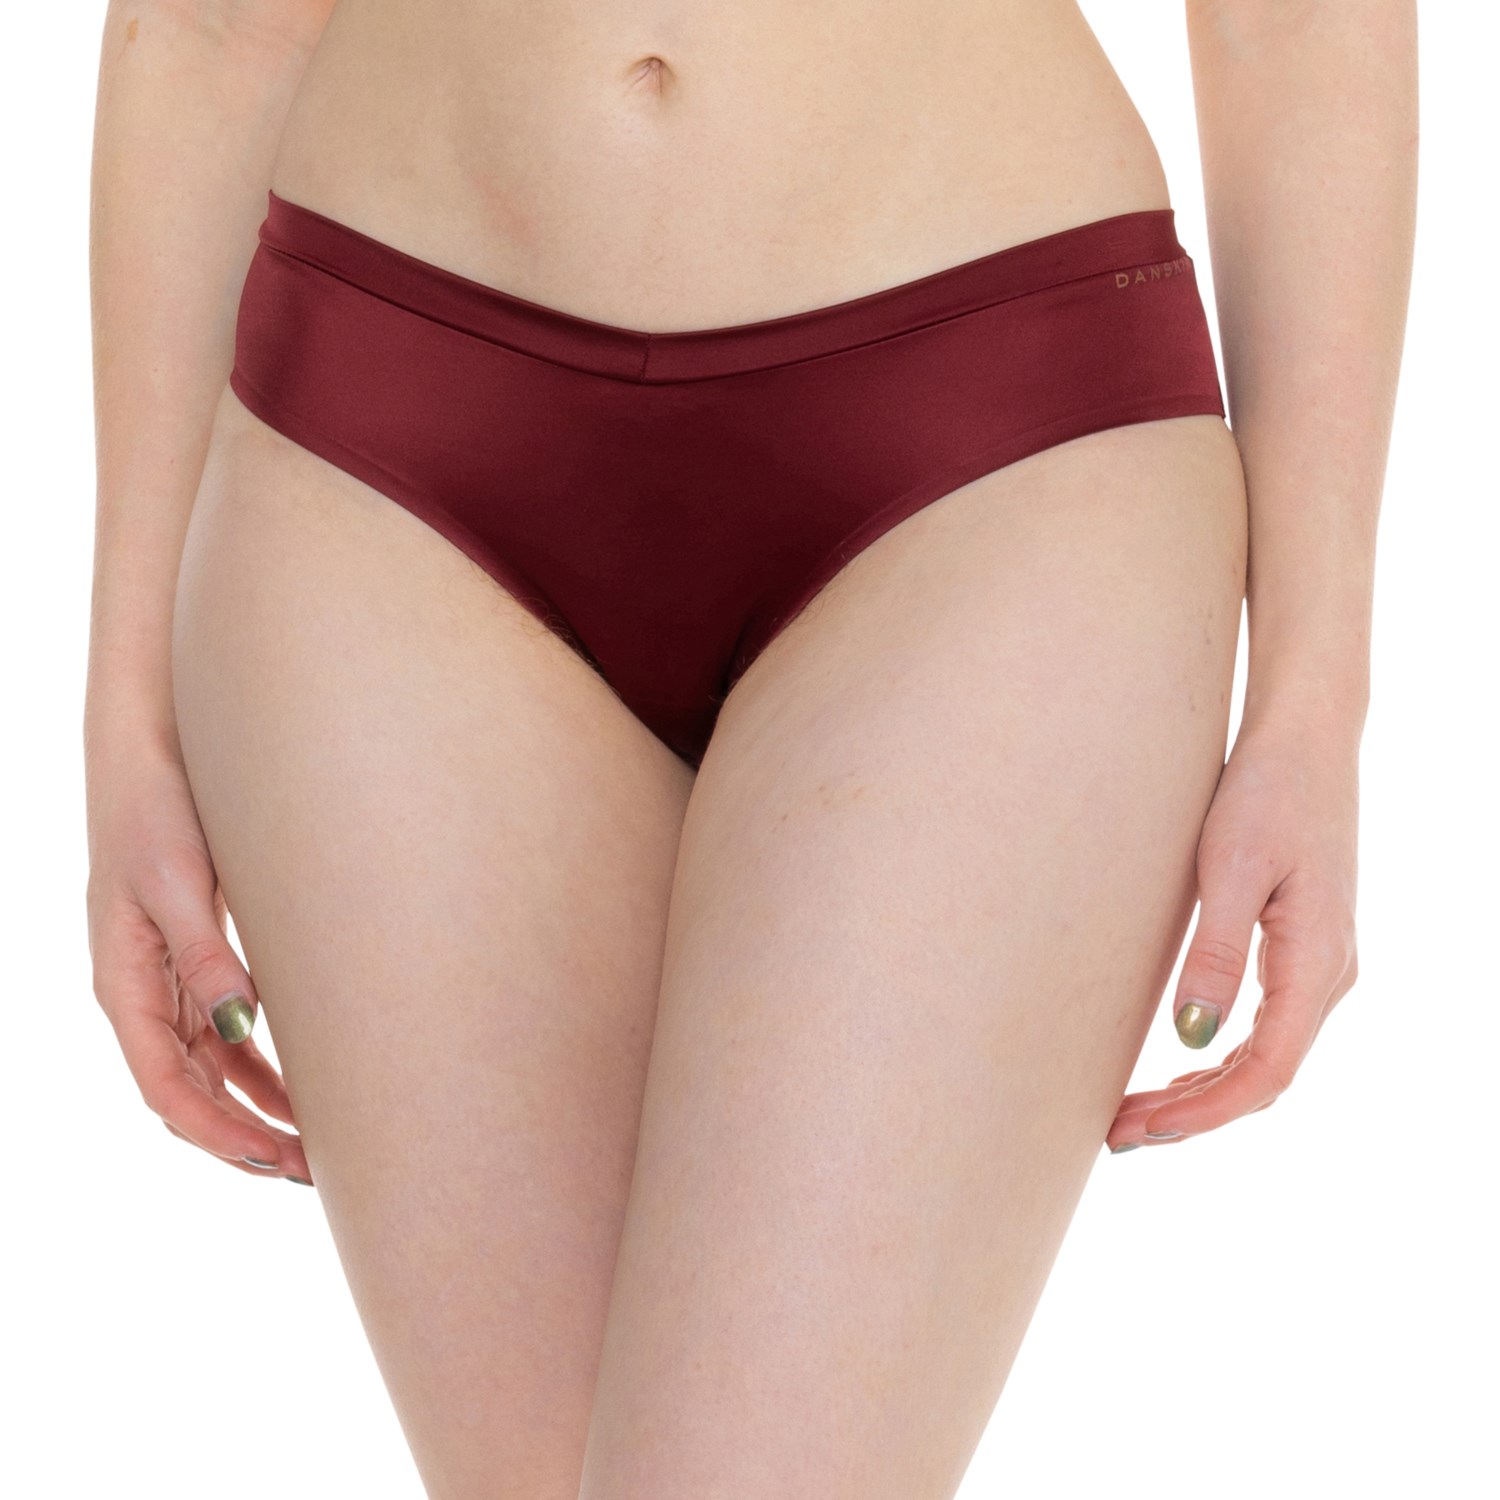 DANSKIN INTIMATES 5-Pack Super Soft Panties Thong Underwear DS3452